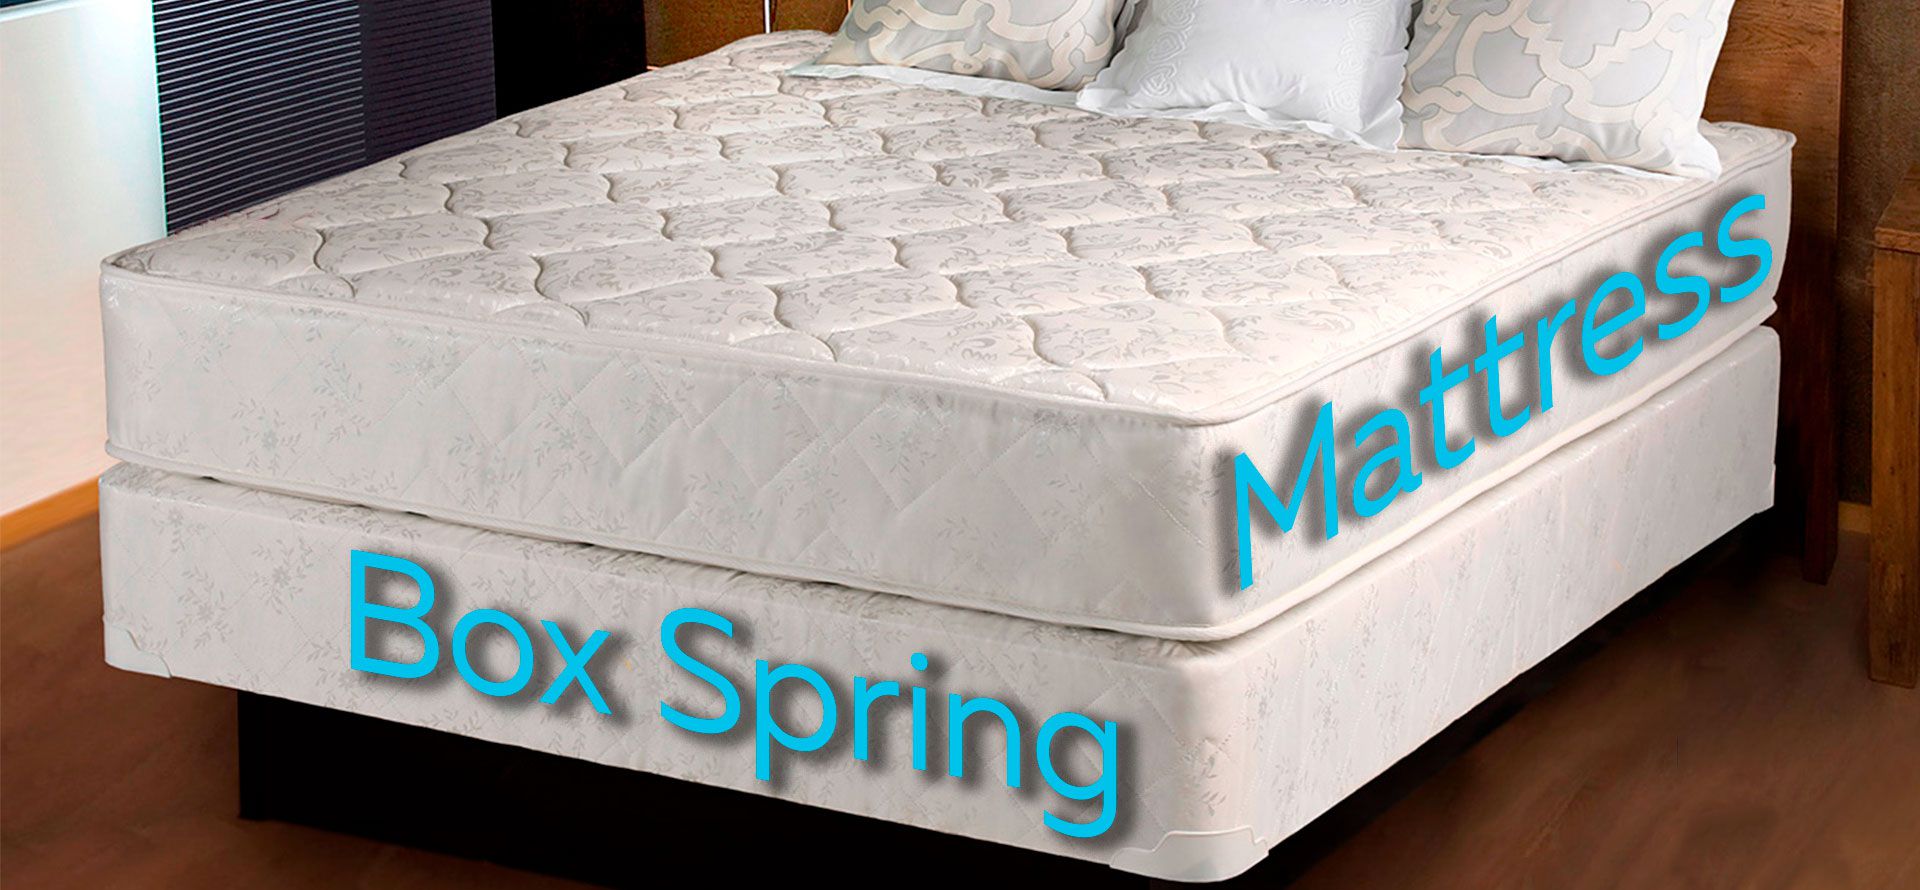 Innerspring mattress on the box spring.